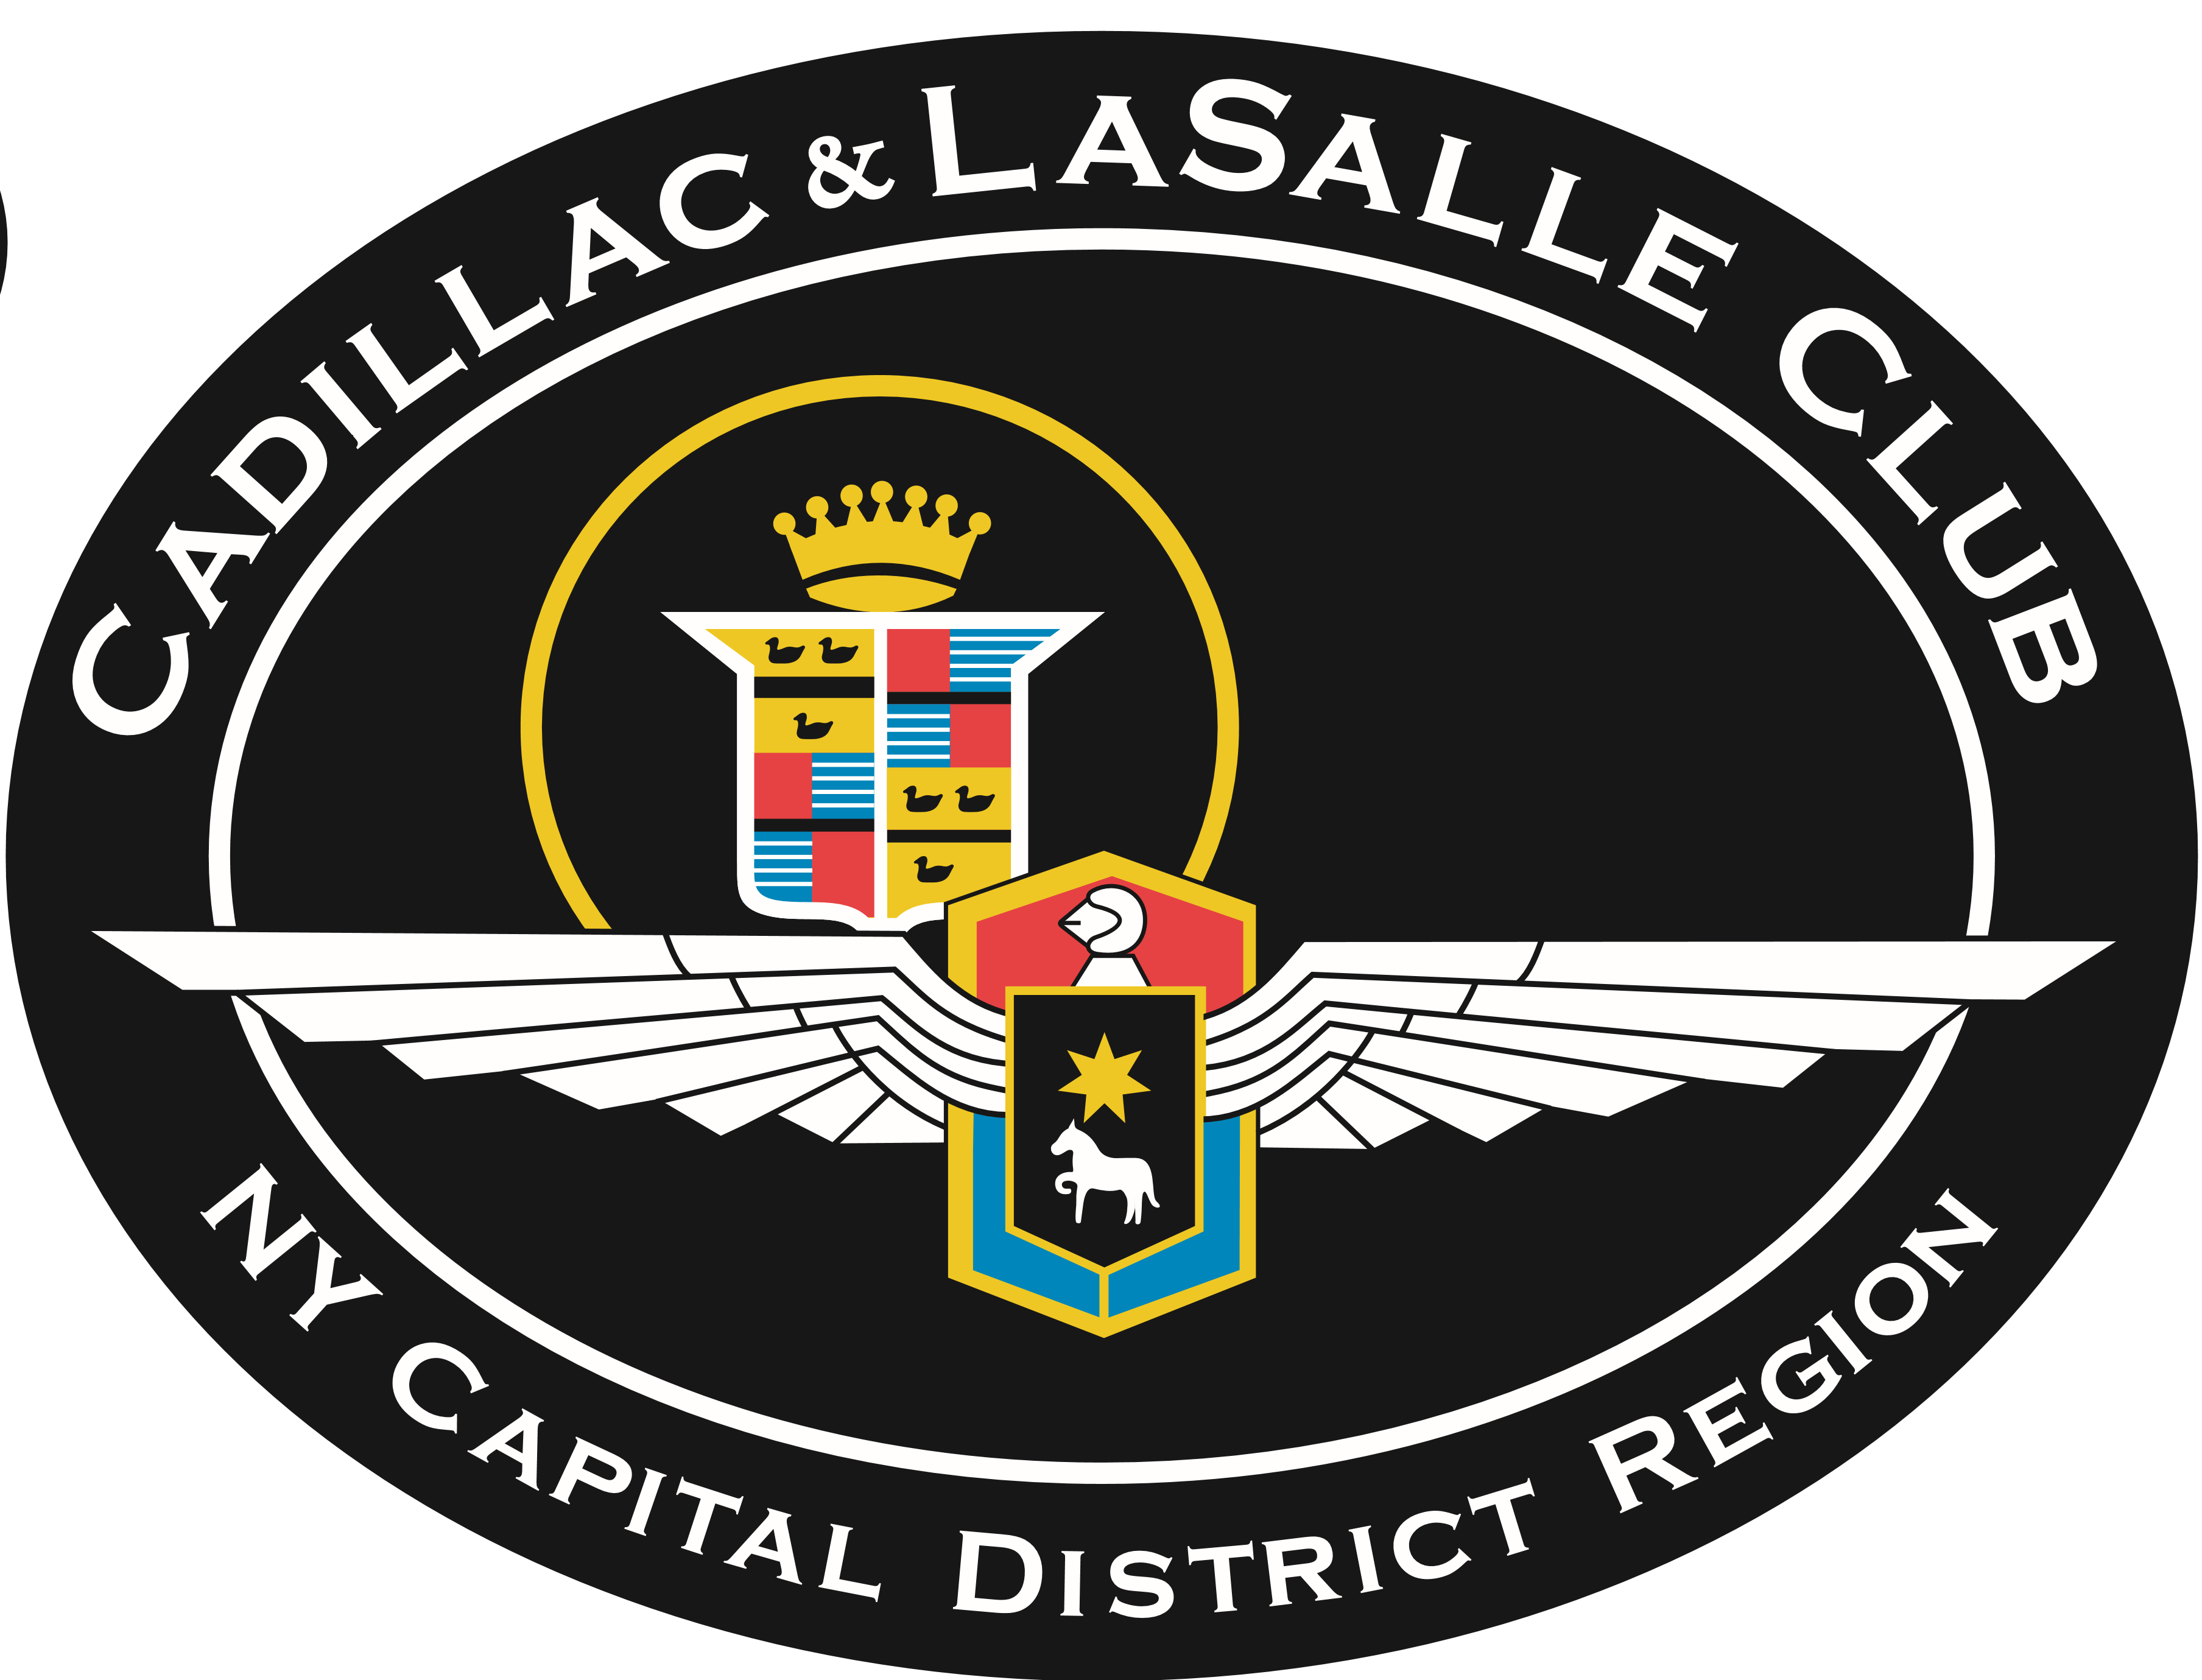 Cadillac LaSalle Club Logo - Cadillac & LaSalle Club (CLC) Grand National Meet 2014 | July 8th ...